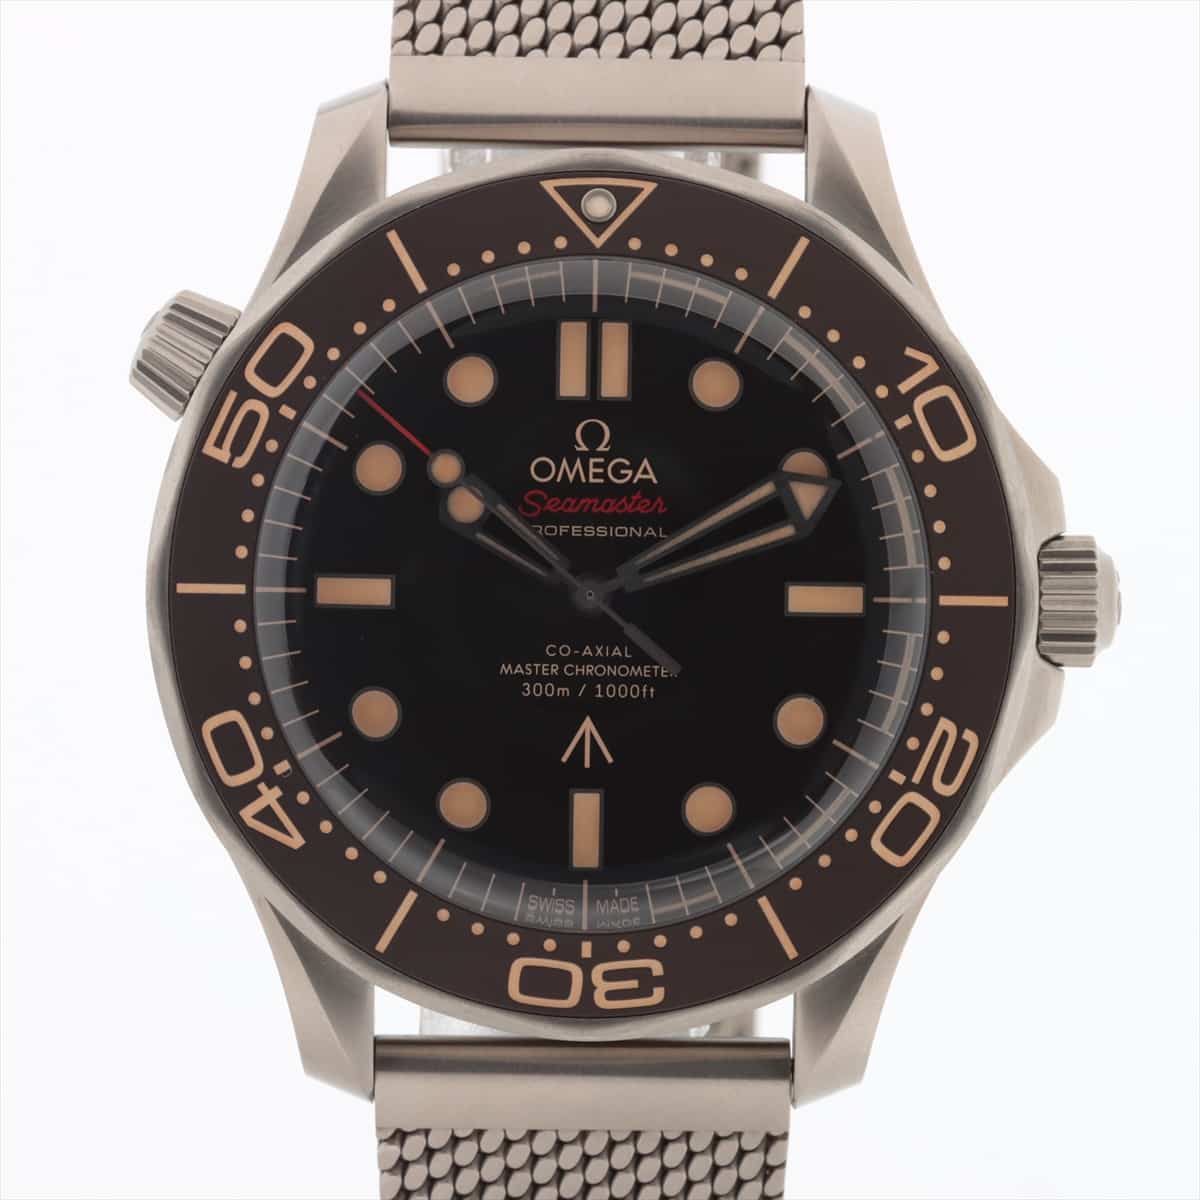 [Chrono] Omega Seamaster Diver 300 Coaxial Master Chronometer 007 editions 210.90.42.20.01.001 TI AT Brown-Face